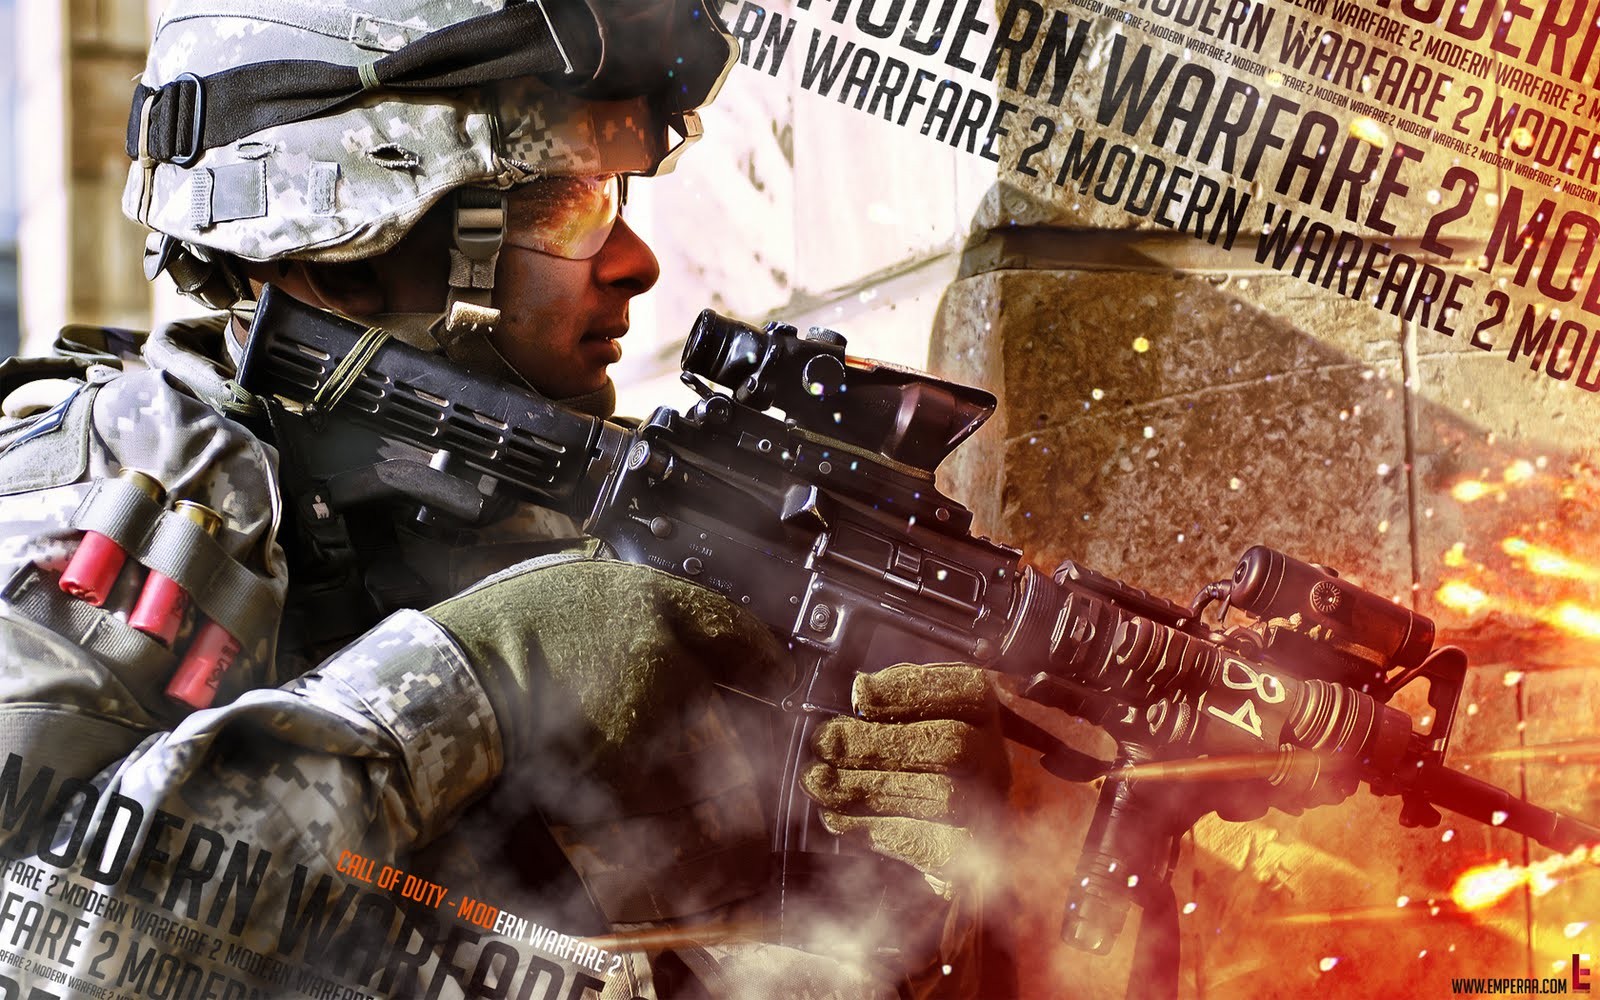 General 1600x1000 Call of Duty: Modern Warfare 2 machine gun video games soldier weapon Call of Duty PC gaming video game men video game art helmet men